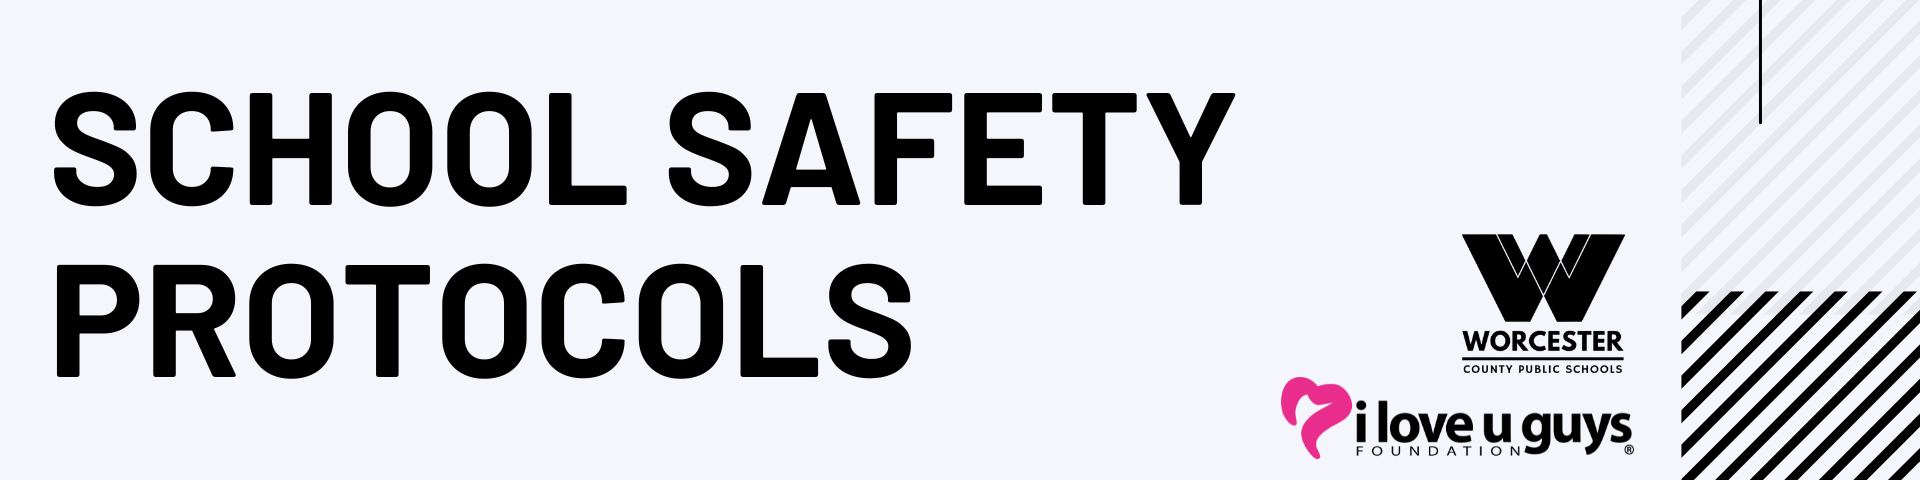 School Safety Protocols